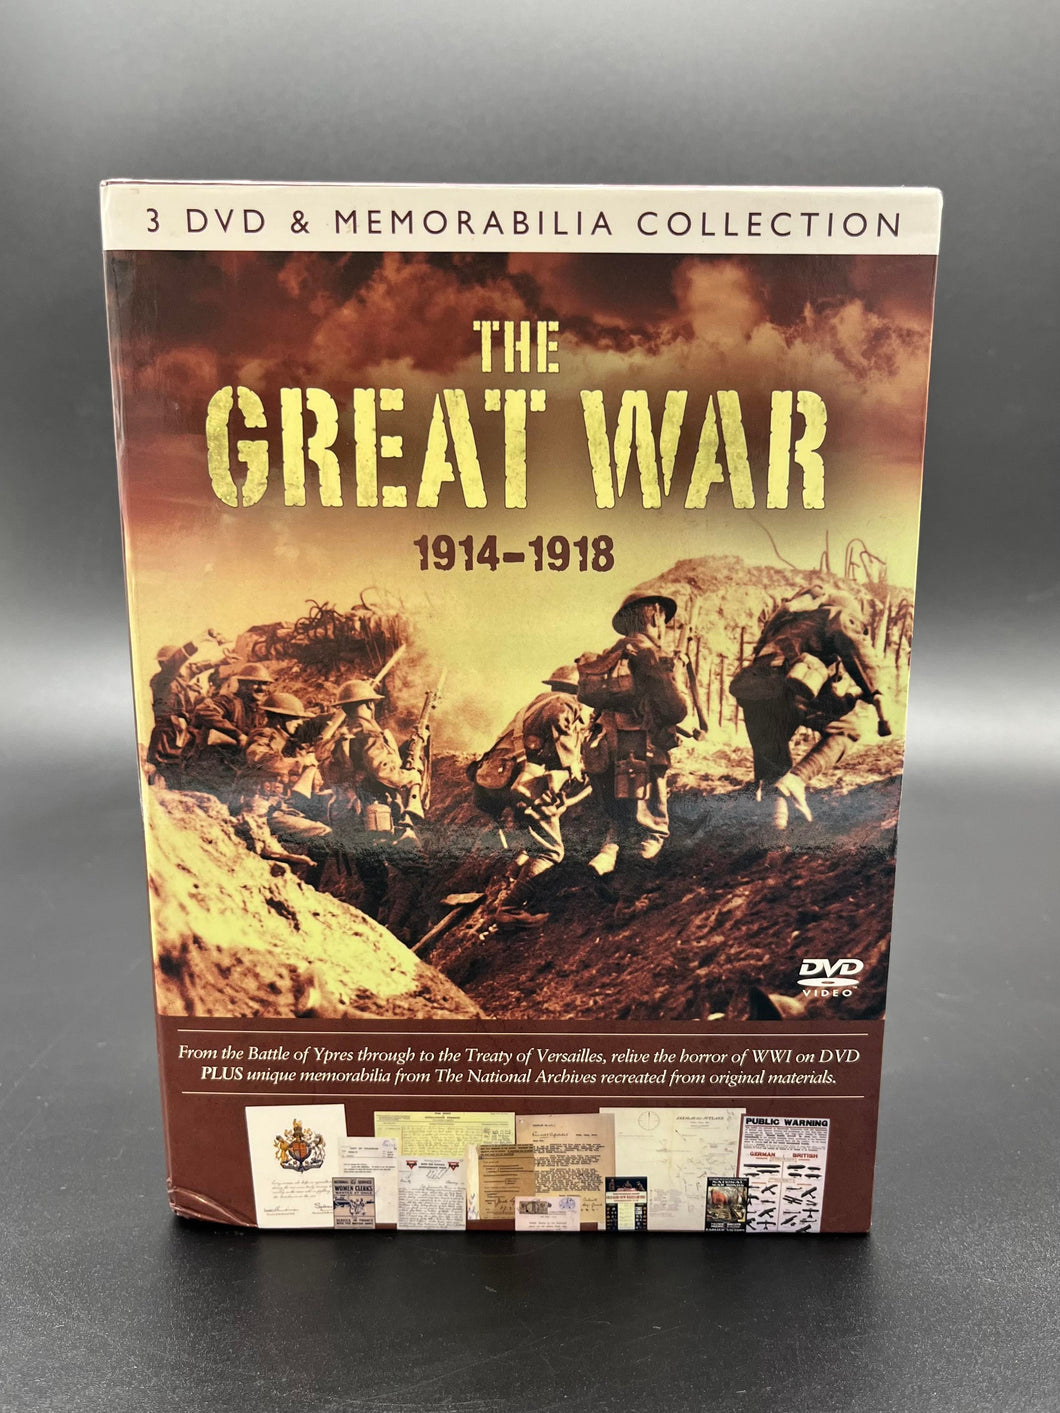 The Great War (1914-1918) - 3 DVD & Memorabilia Collection